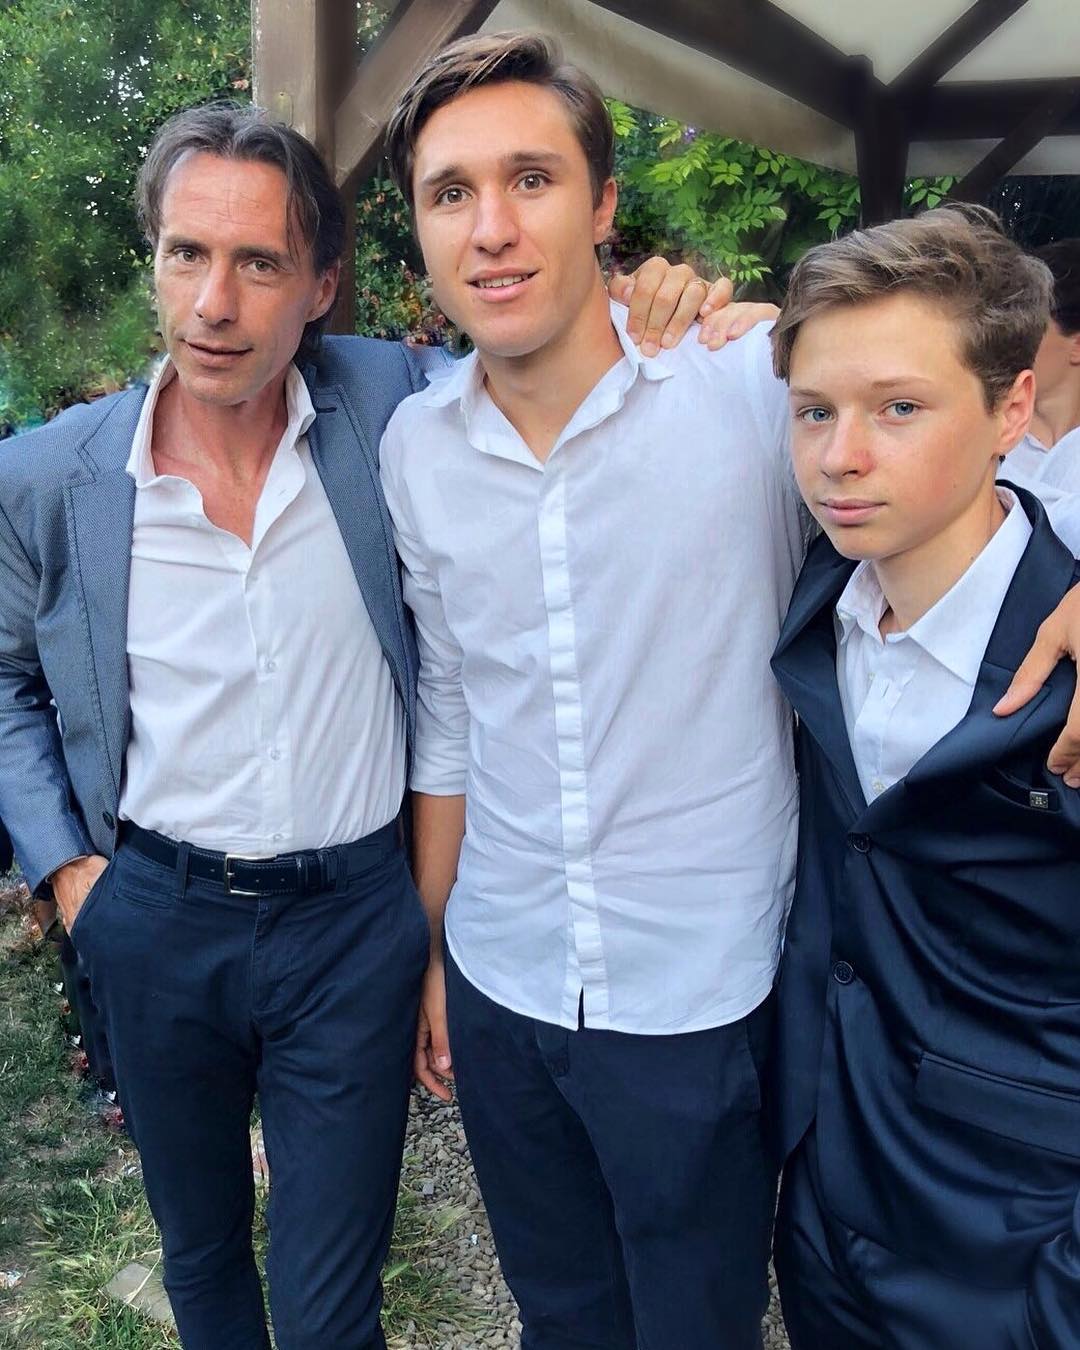 Enrico Chiesa with his two son, Lorenzo Chiesa and Federico Chiesa.